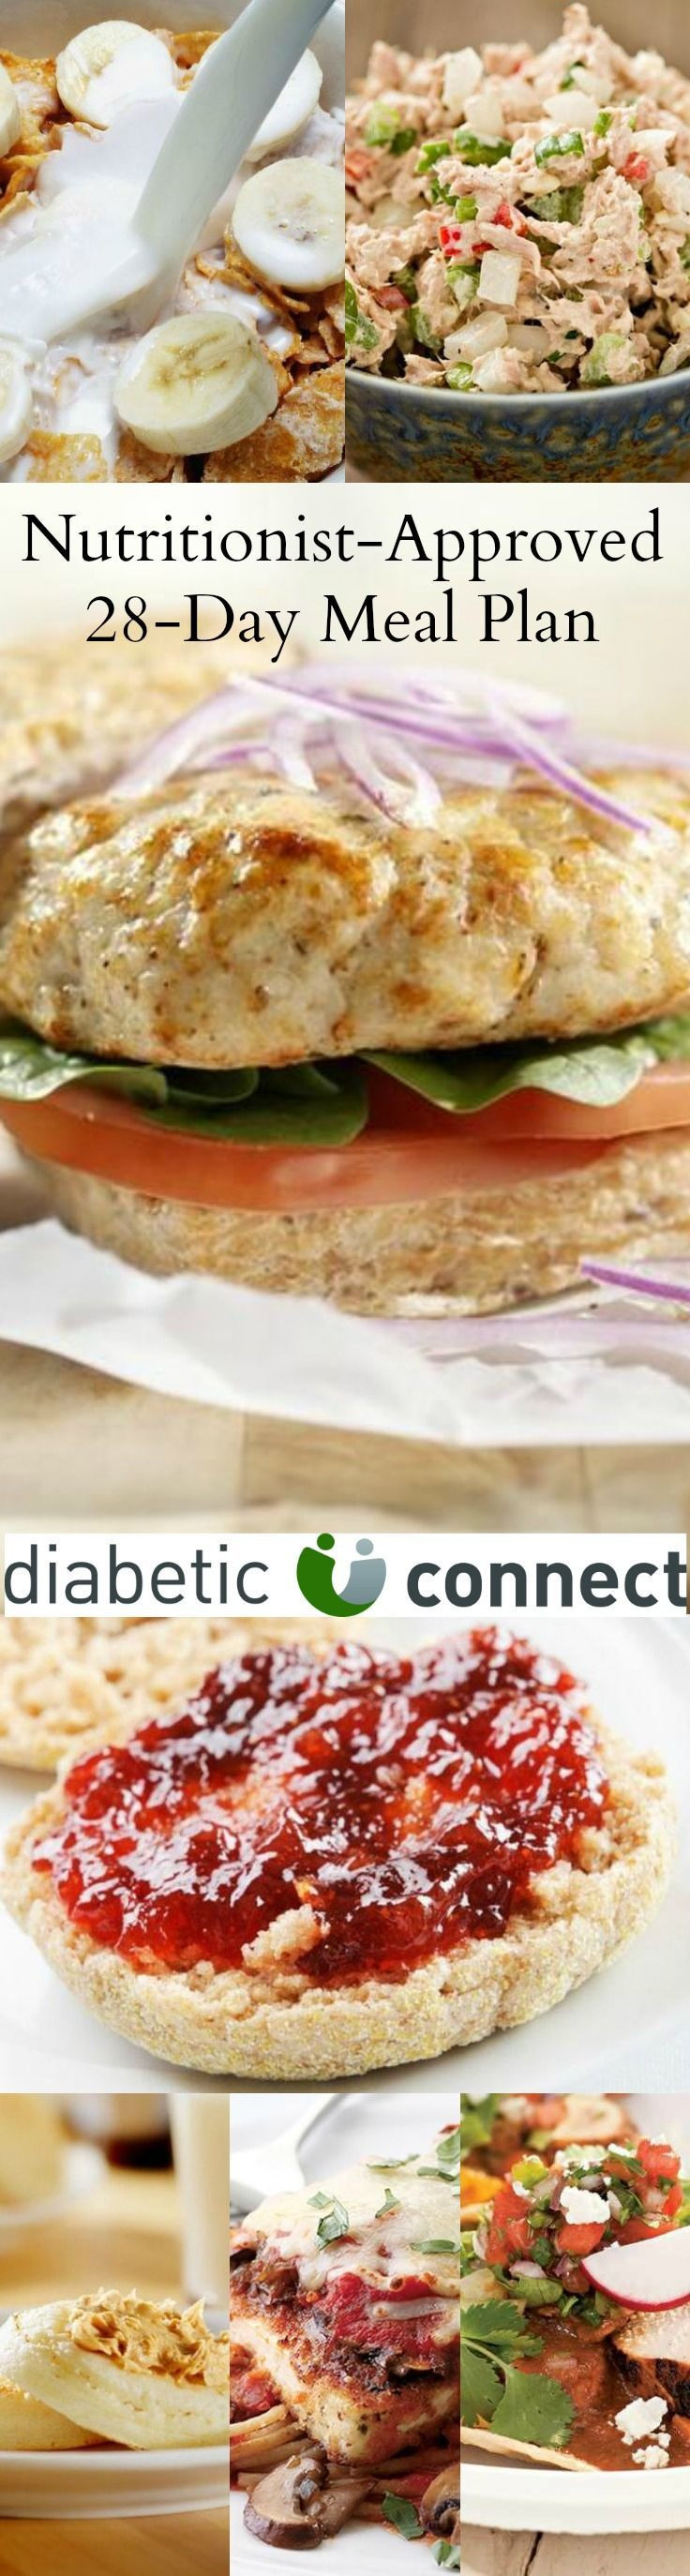 Can Diabetics Eat Hamburgers
 74 best Diabetes images on Pinterest